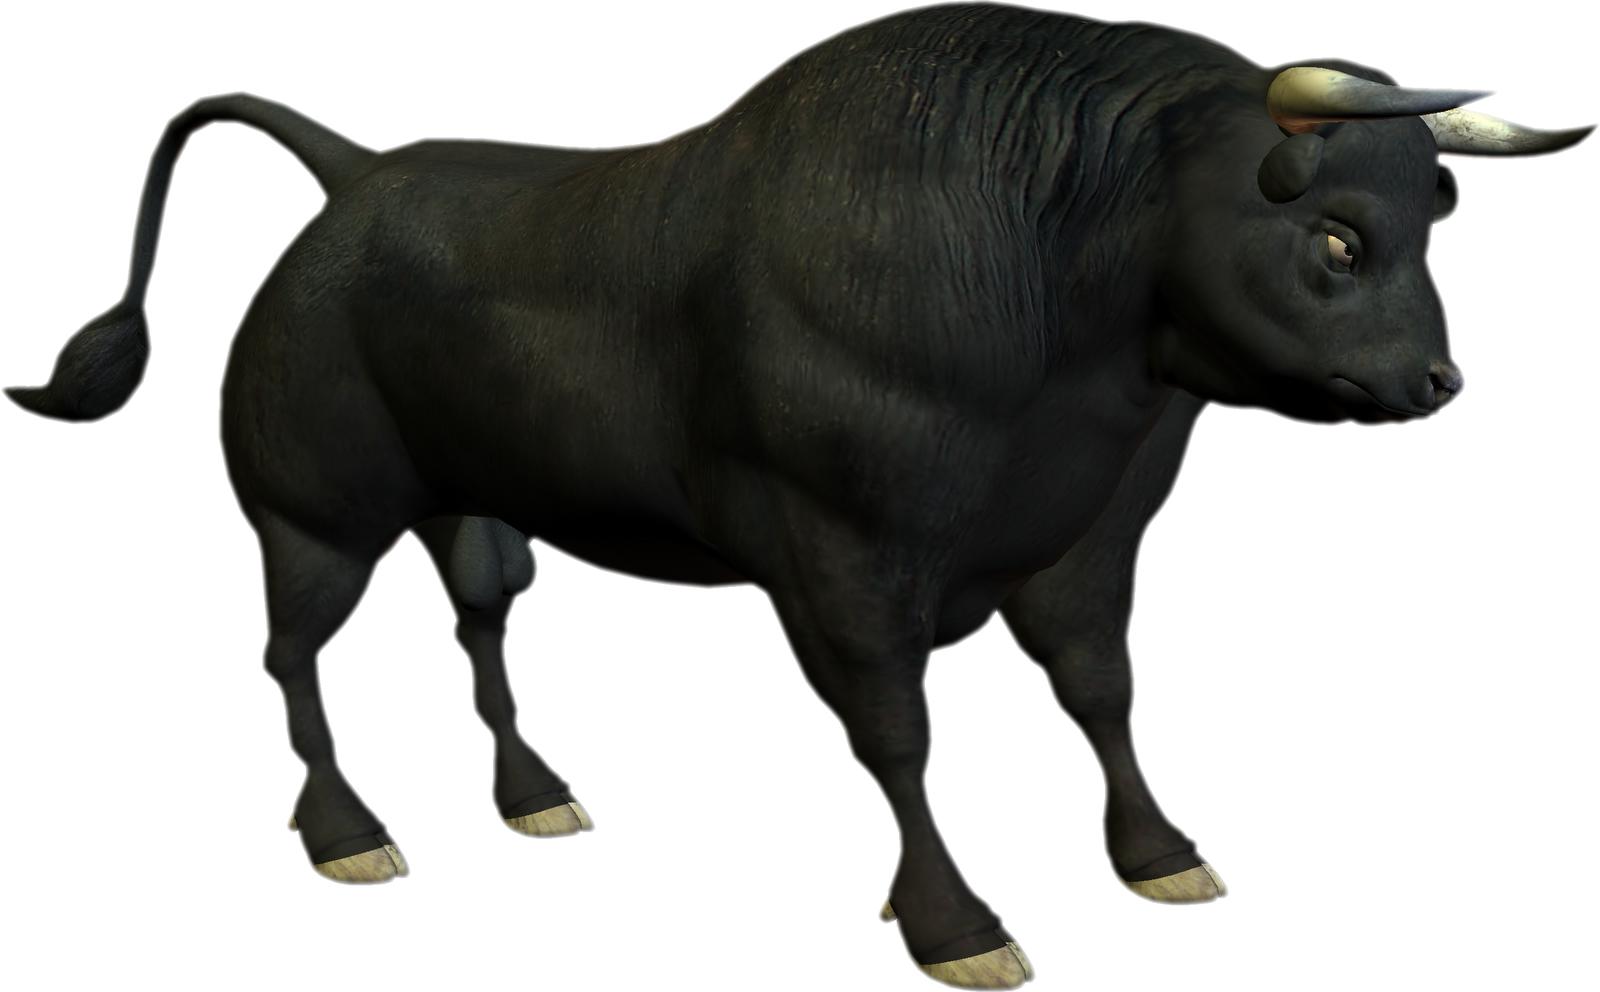 Download wallpaper: black bull, download photo, wallpaper